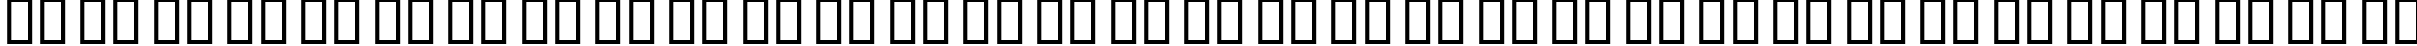 Пример написания русского алфавита шрифтом BN BenWitch Project